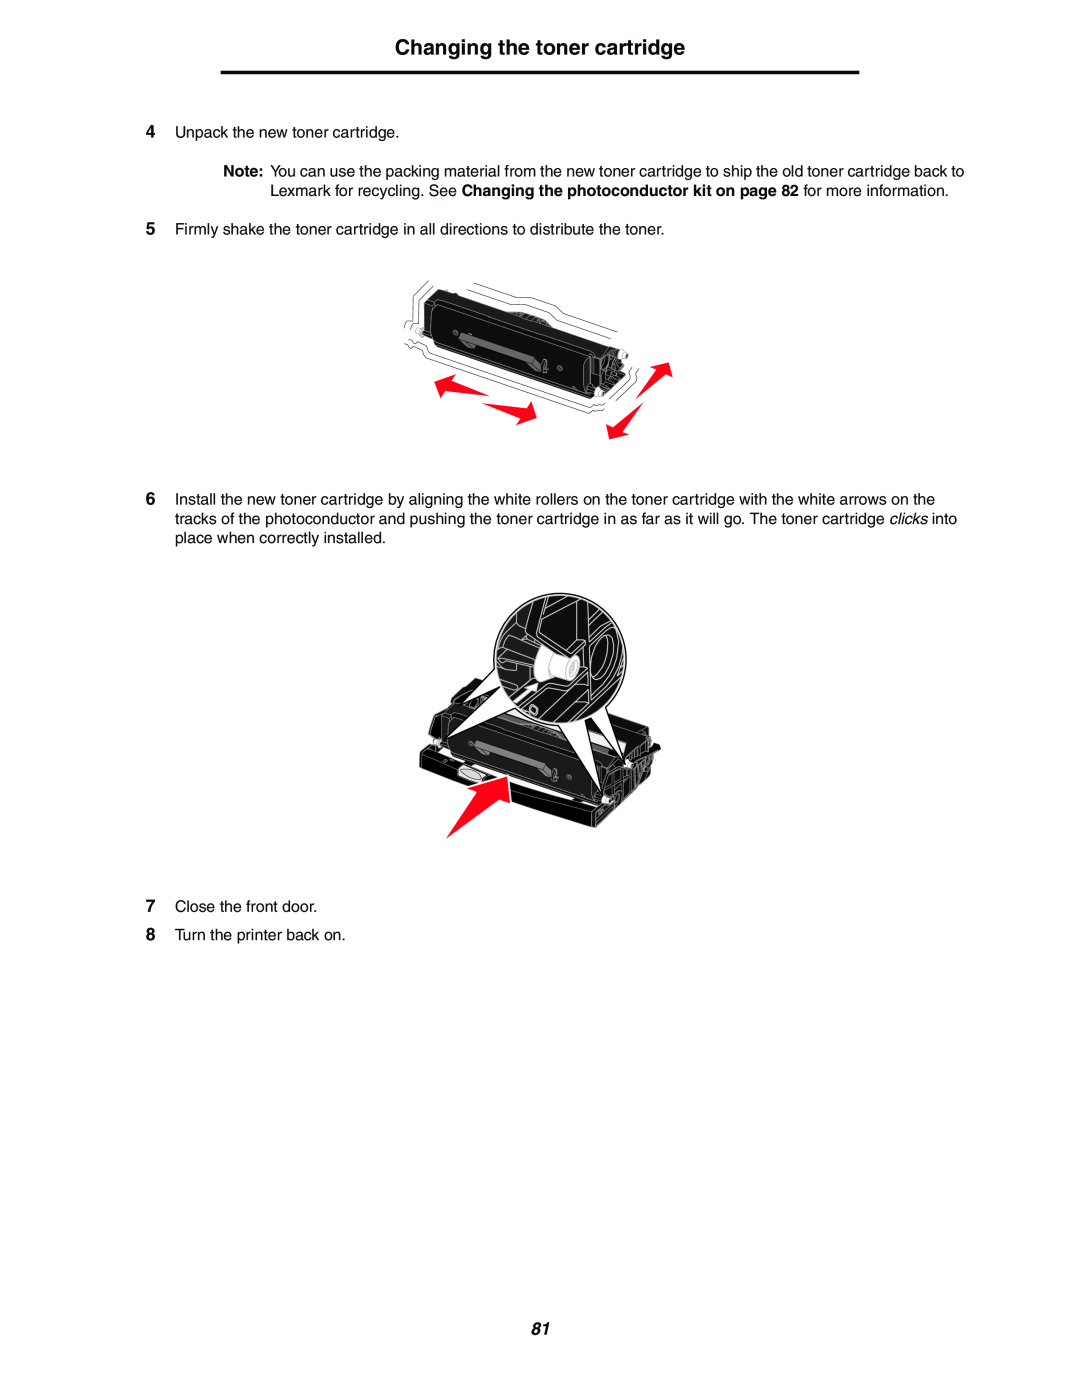 Lexmark 250dn manual Changing the toner cartridge, Unpack the new toner cartridge 